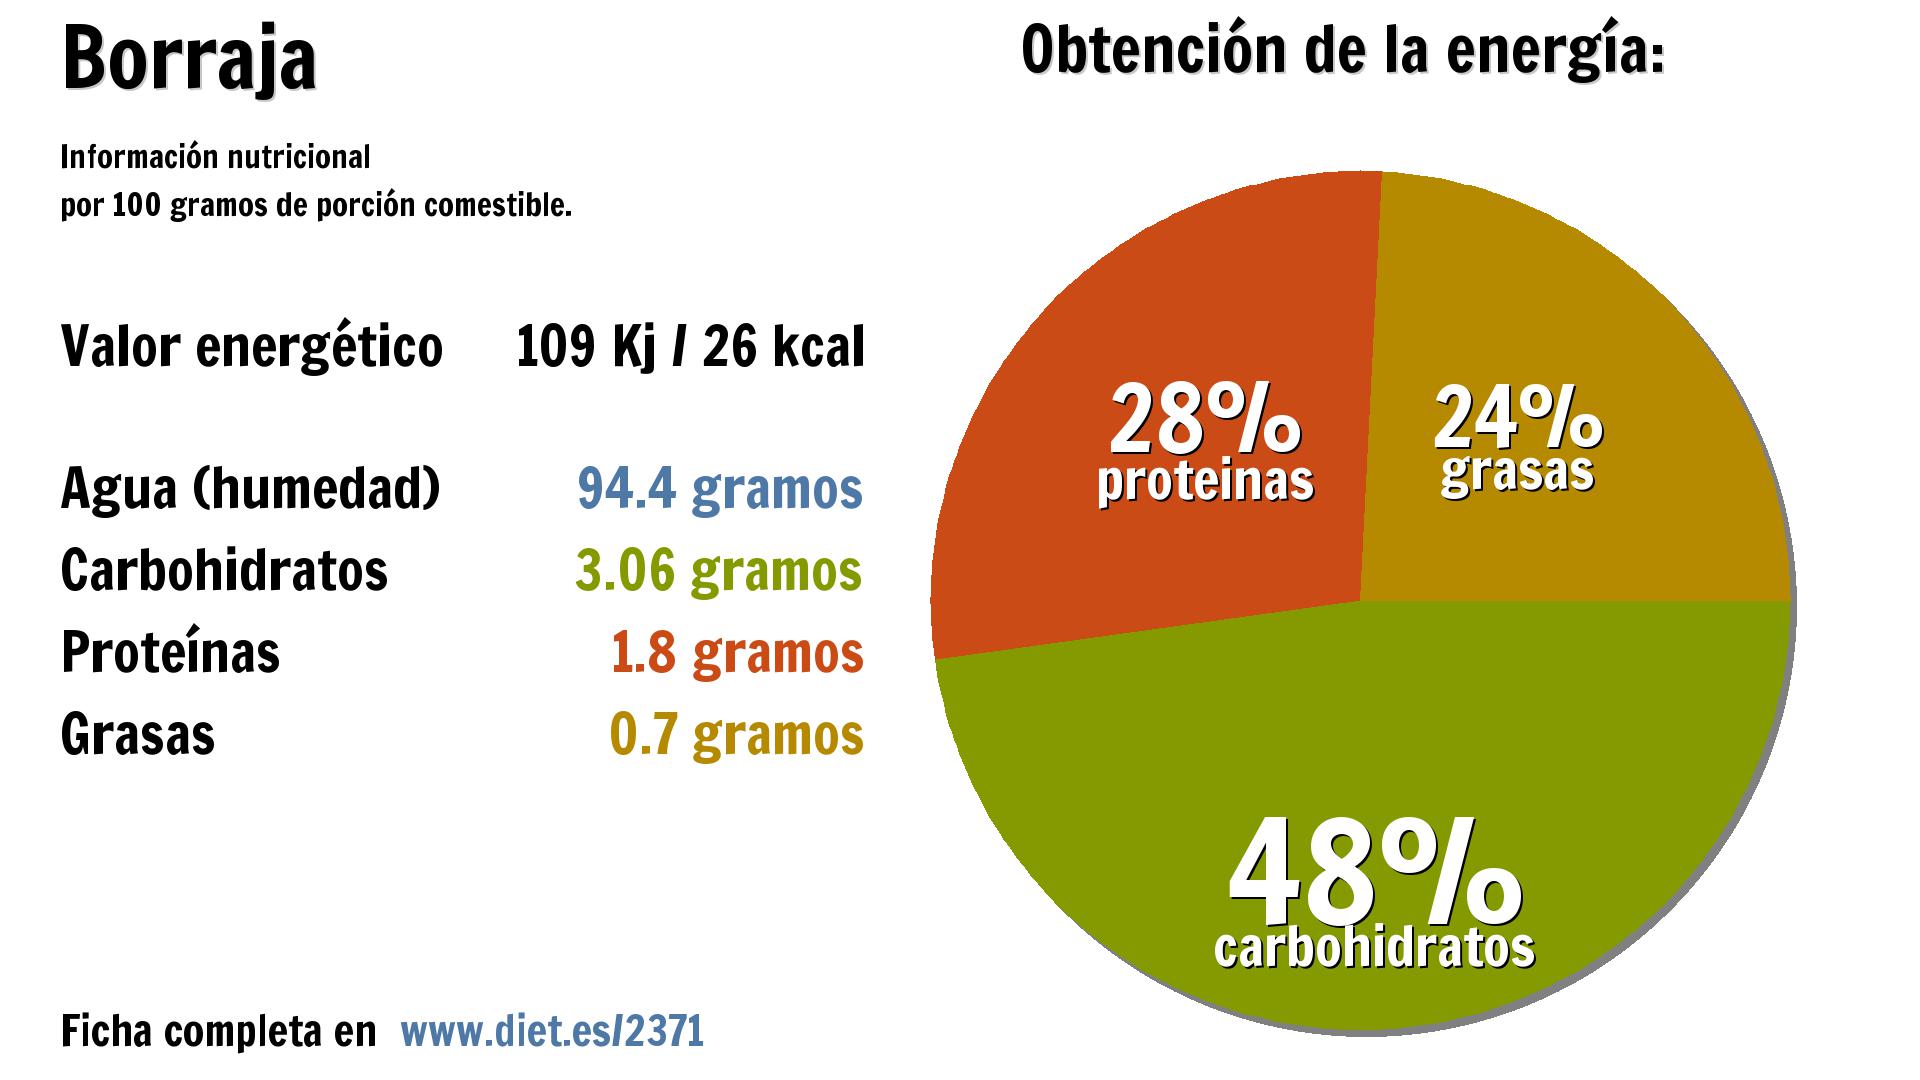 Borraja: energía 109 Kj, agua 94 g., carbohidratos 3 g., proteínas 2 g. y grasas 1 g.